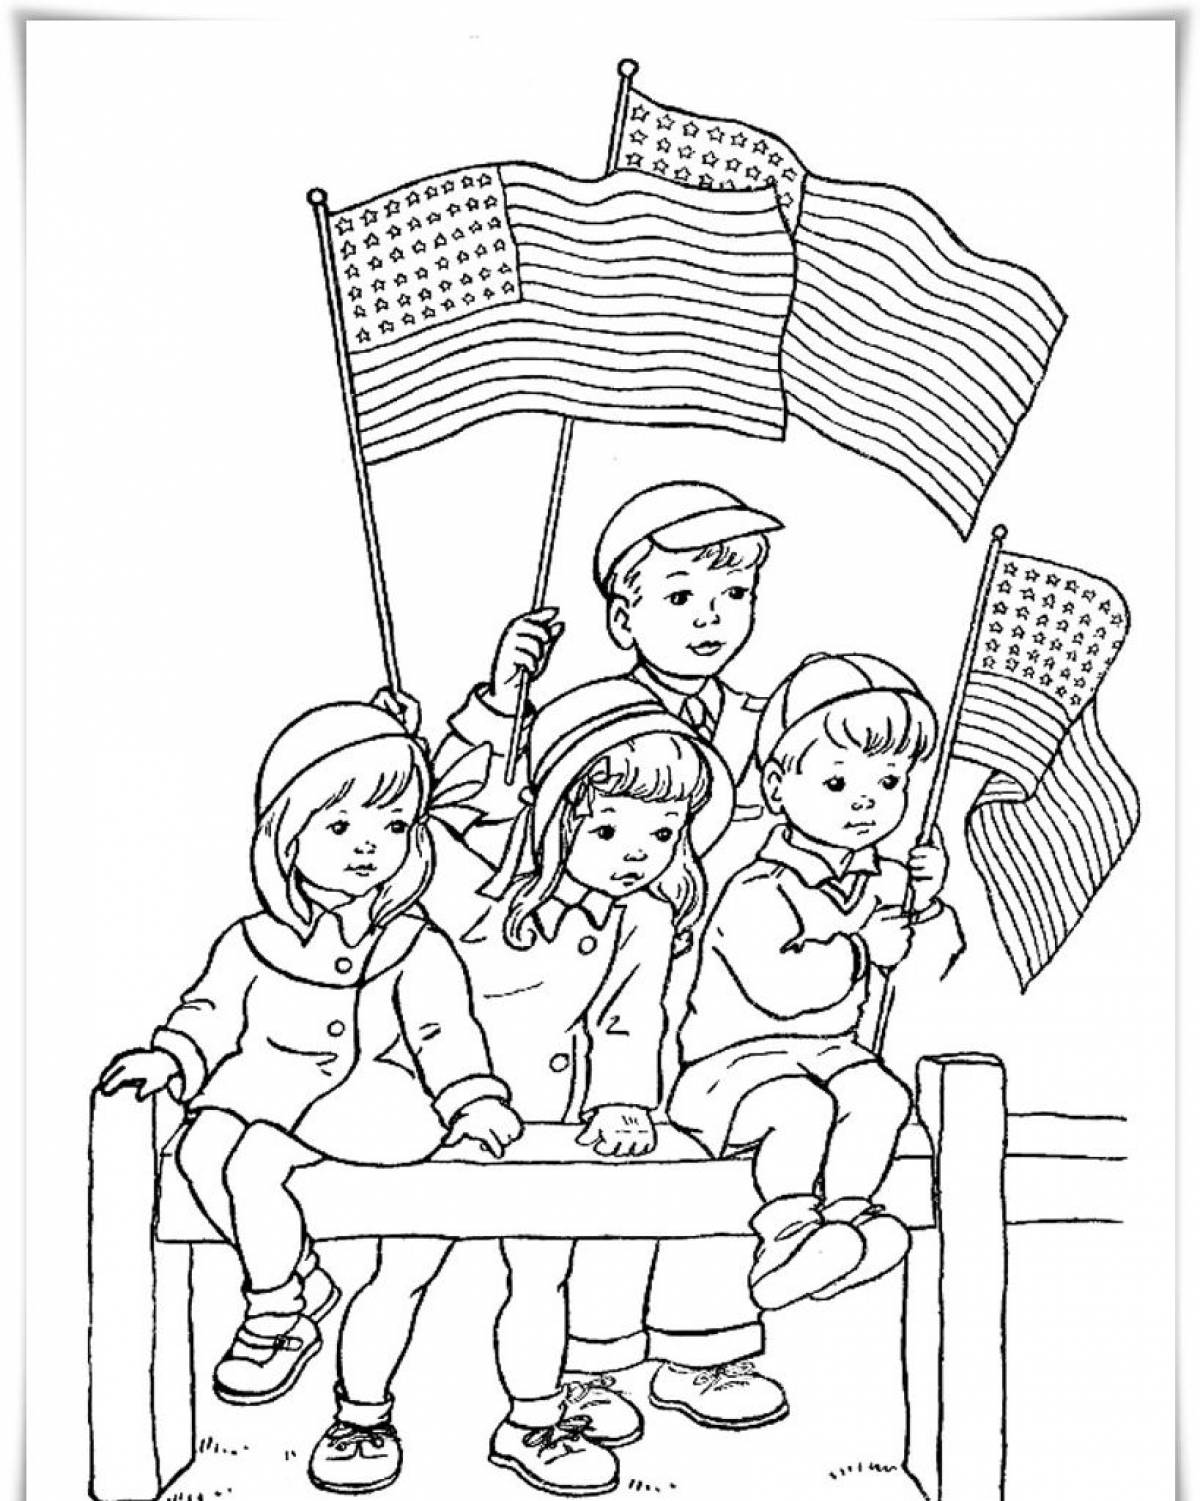 On a patriotic theme for schoolchildren #4